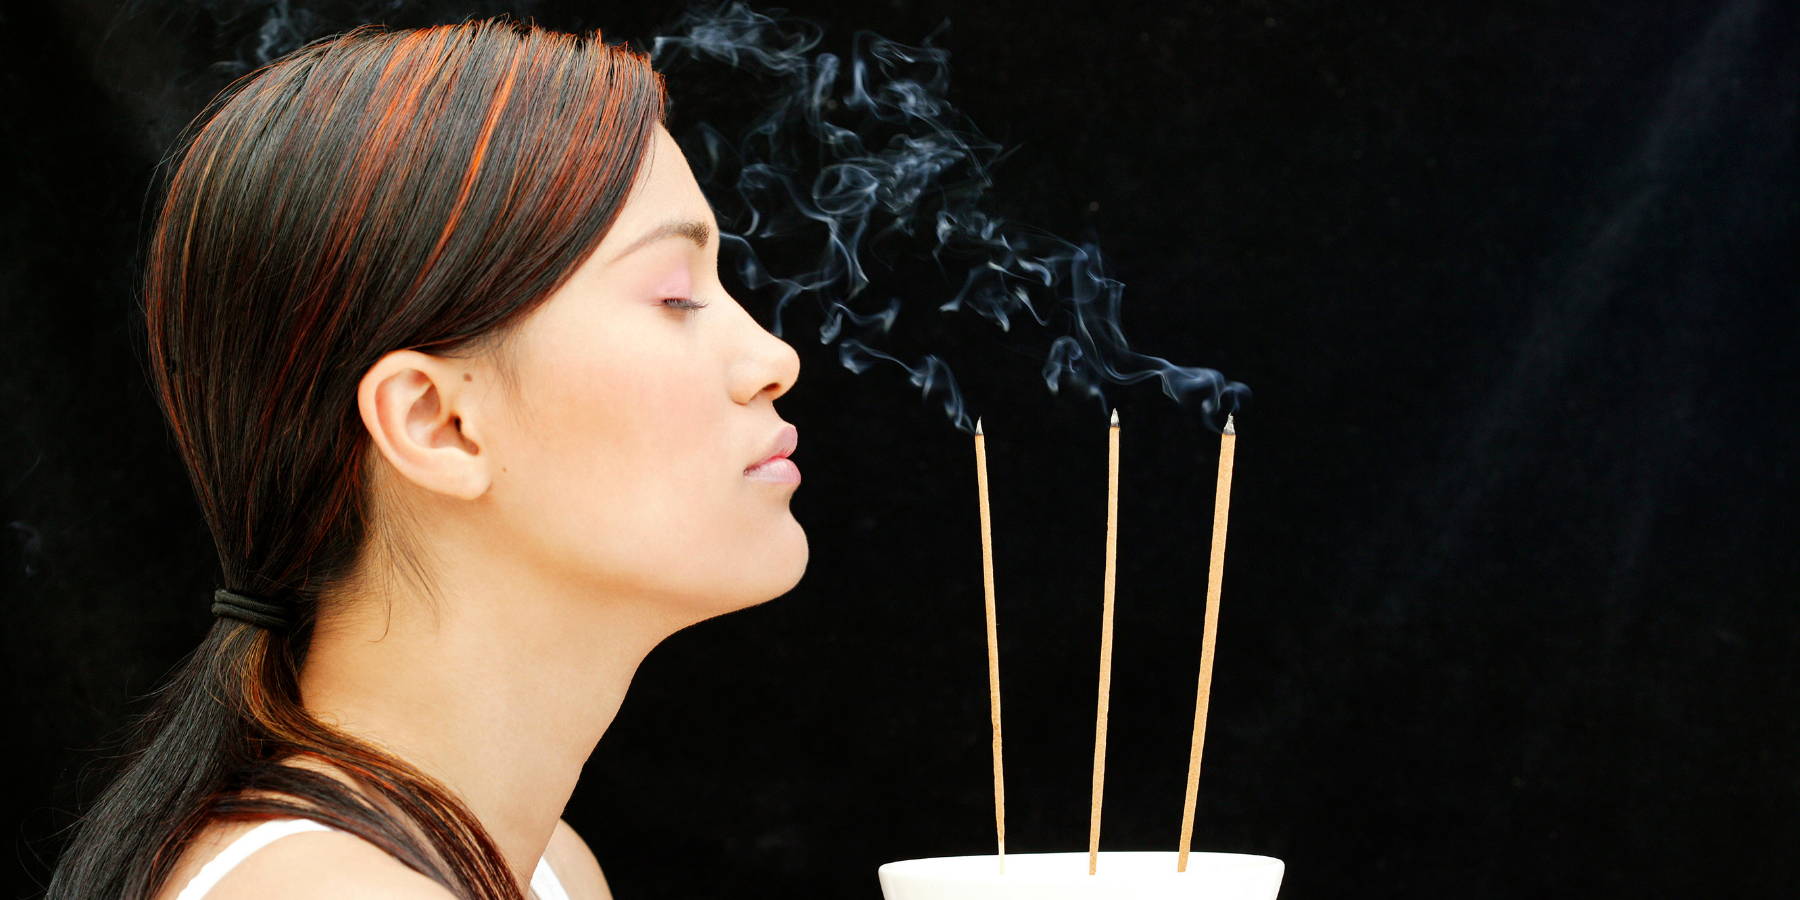 incense for yoga medidation, creativity